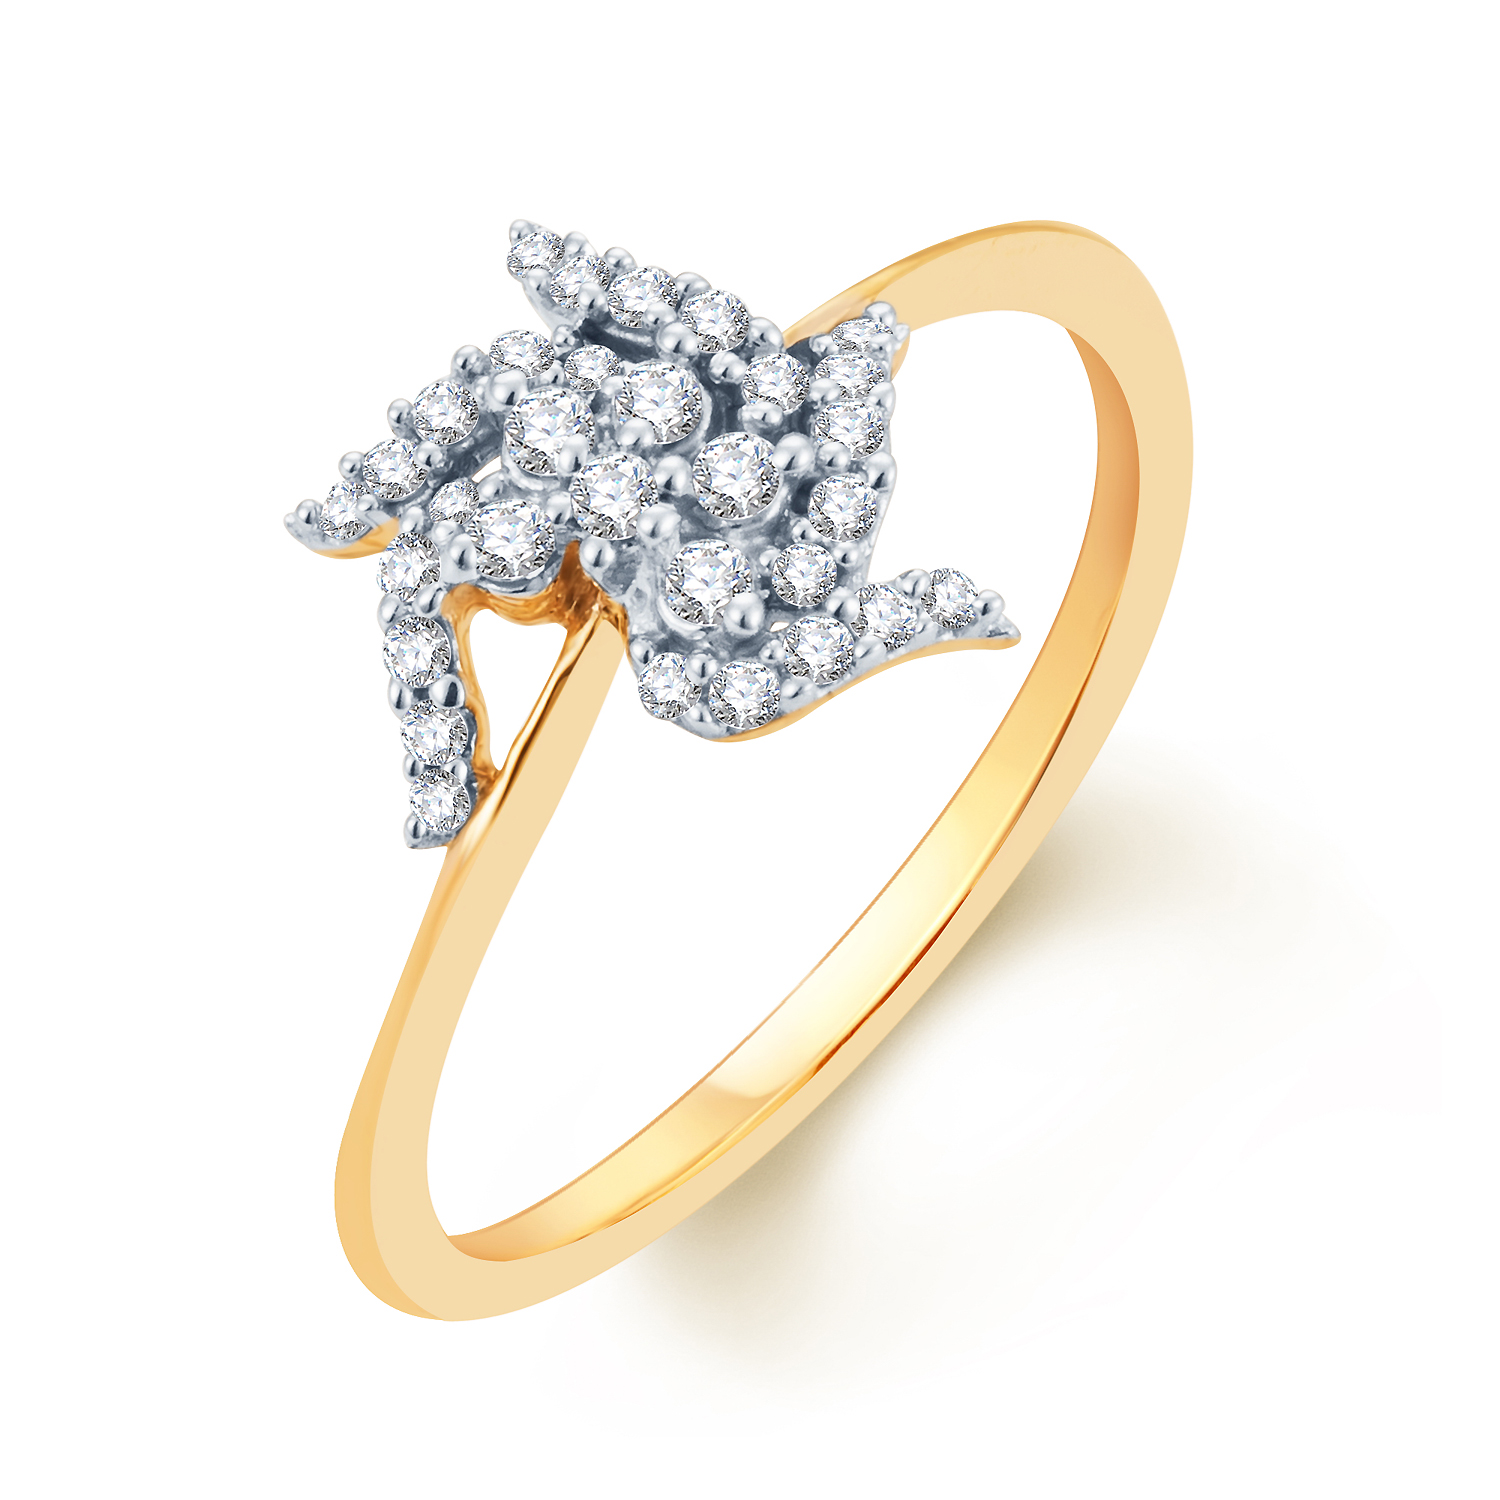 Nakshatra 18k (750) Yellow Gold and Diamond Ring : Amazon.in: Jewellery